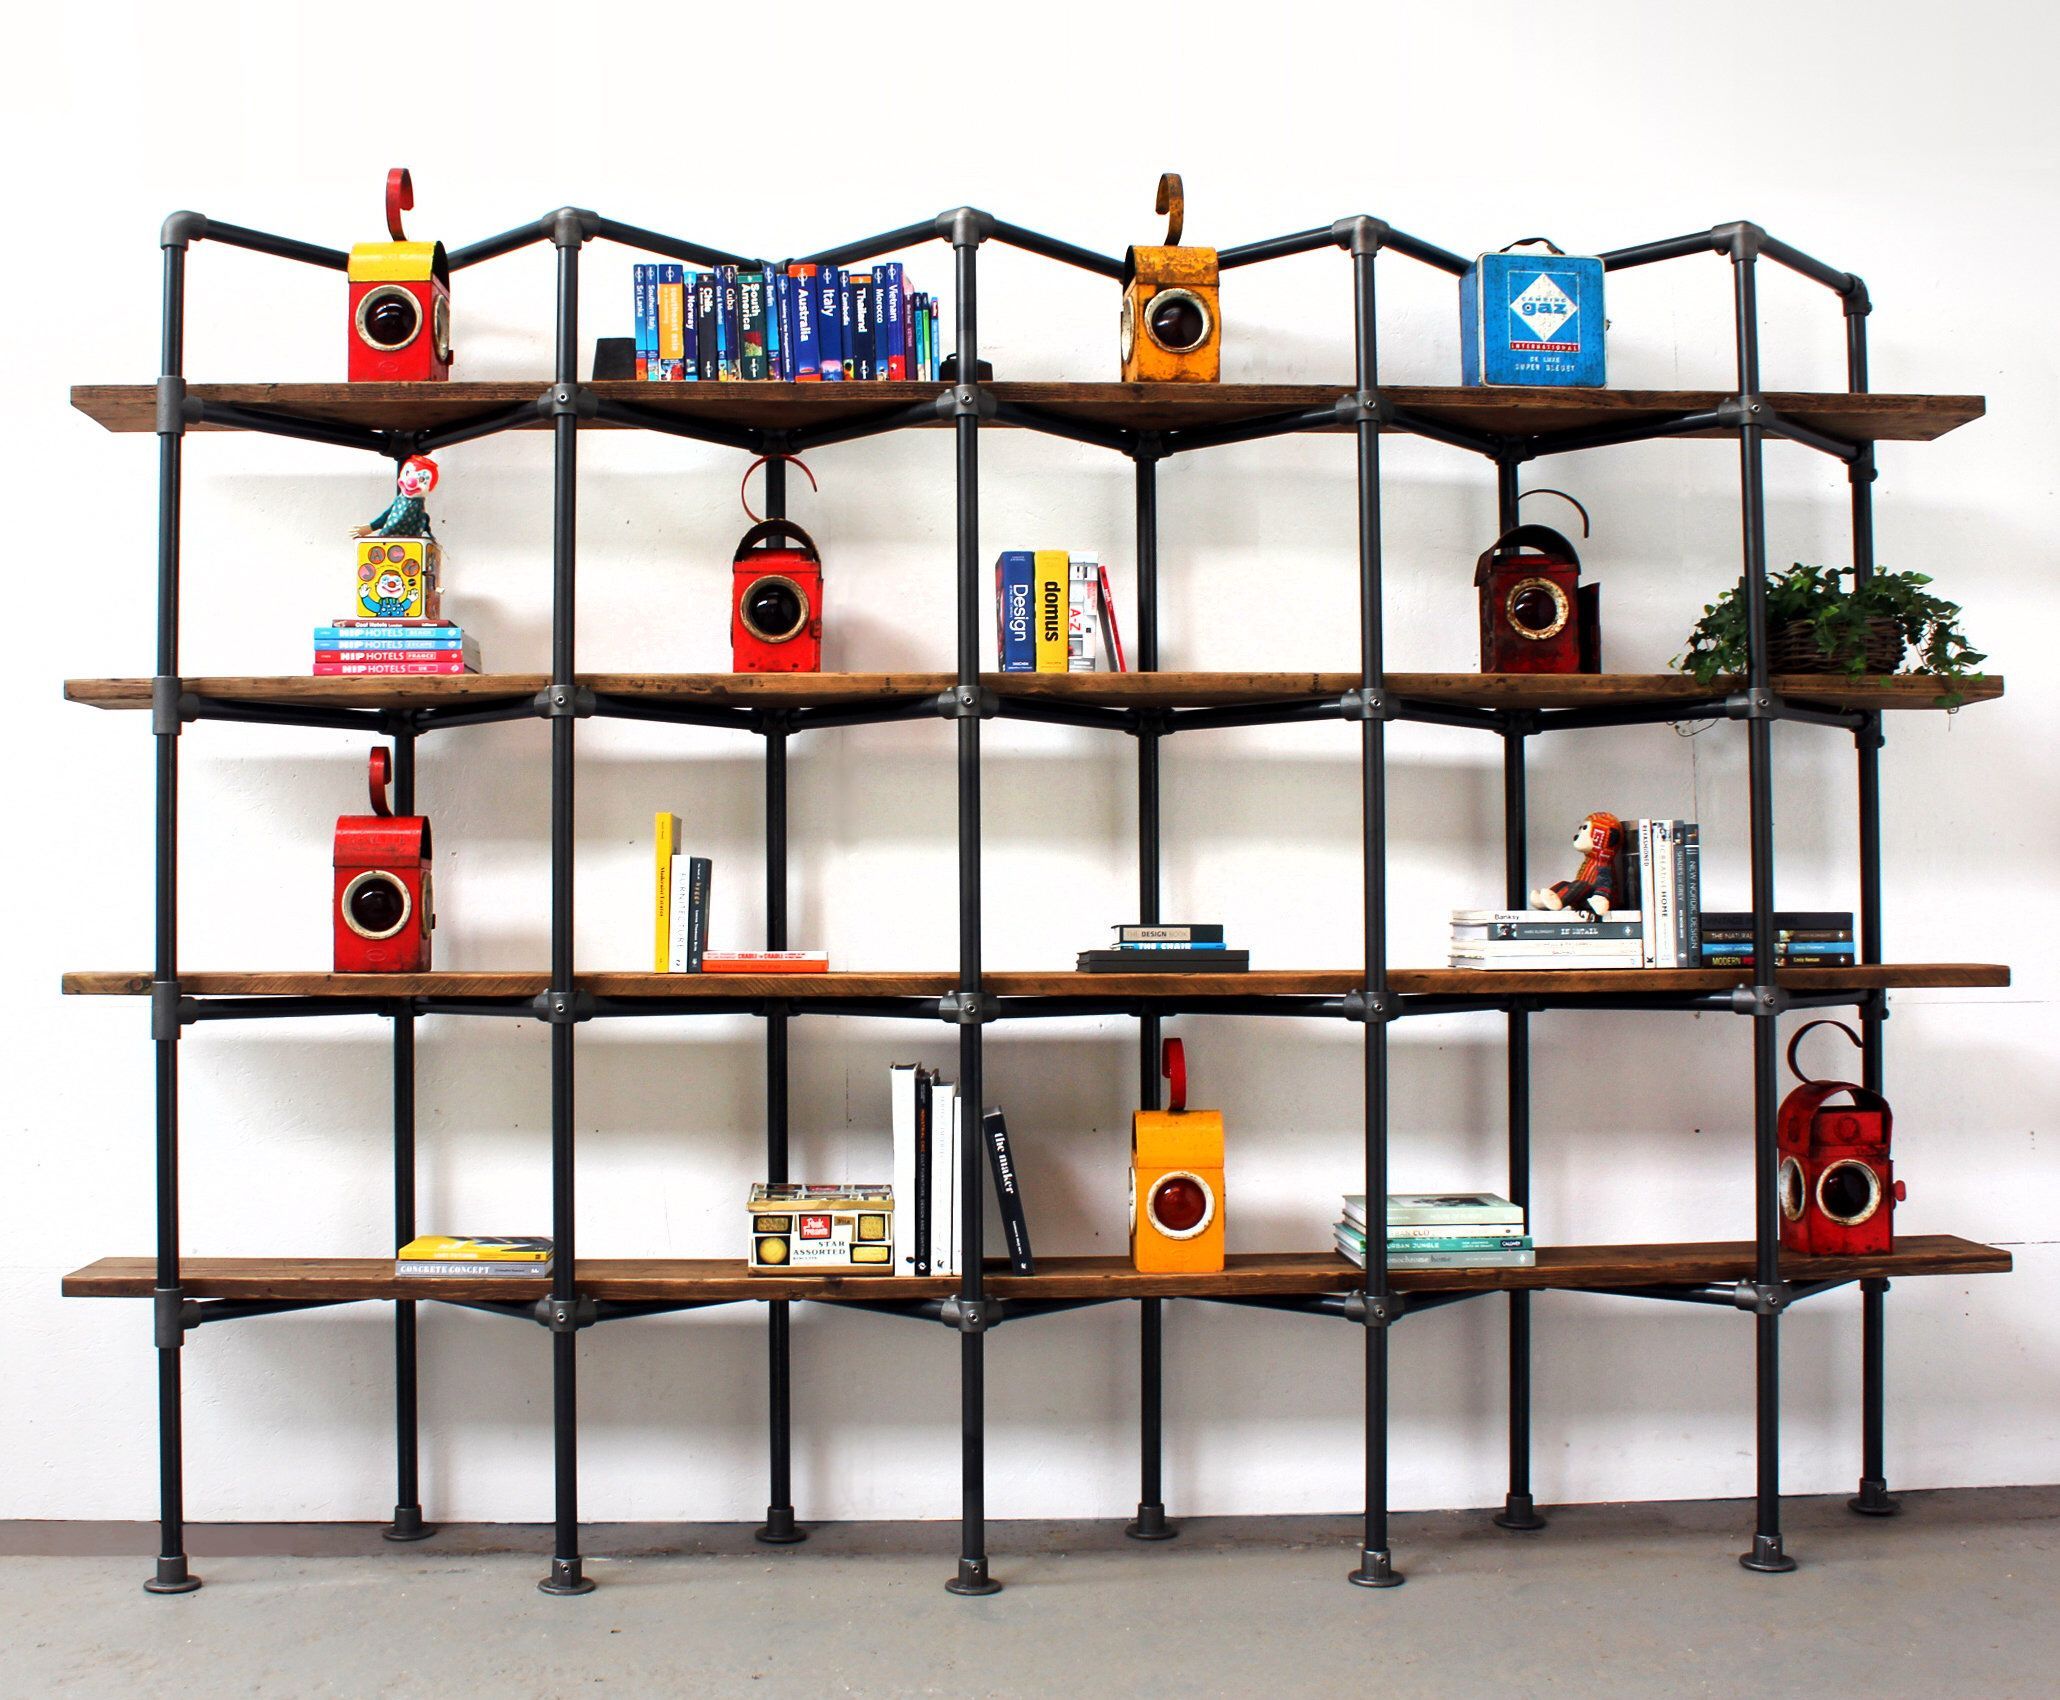 11 room decor Shelves light fixtures ideas